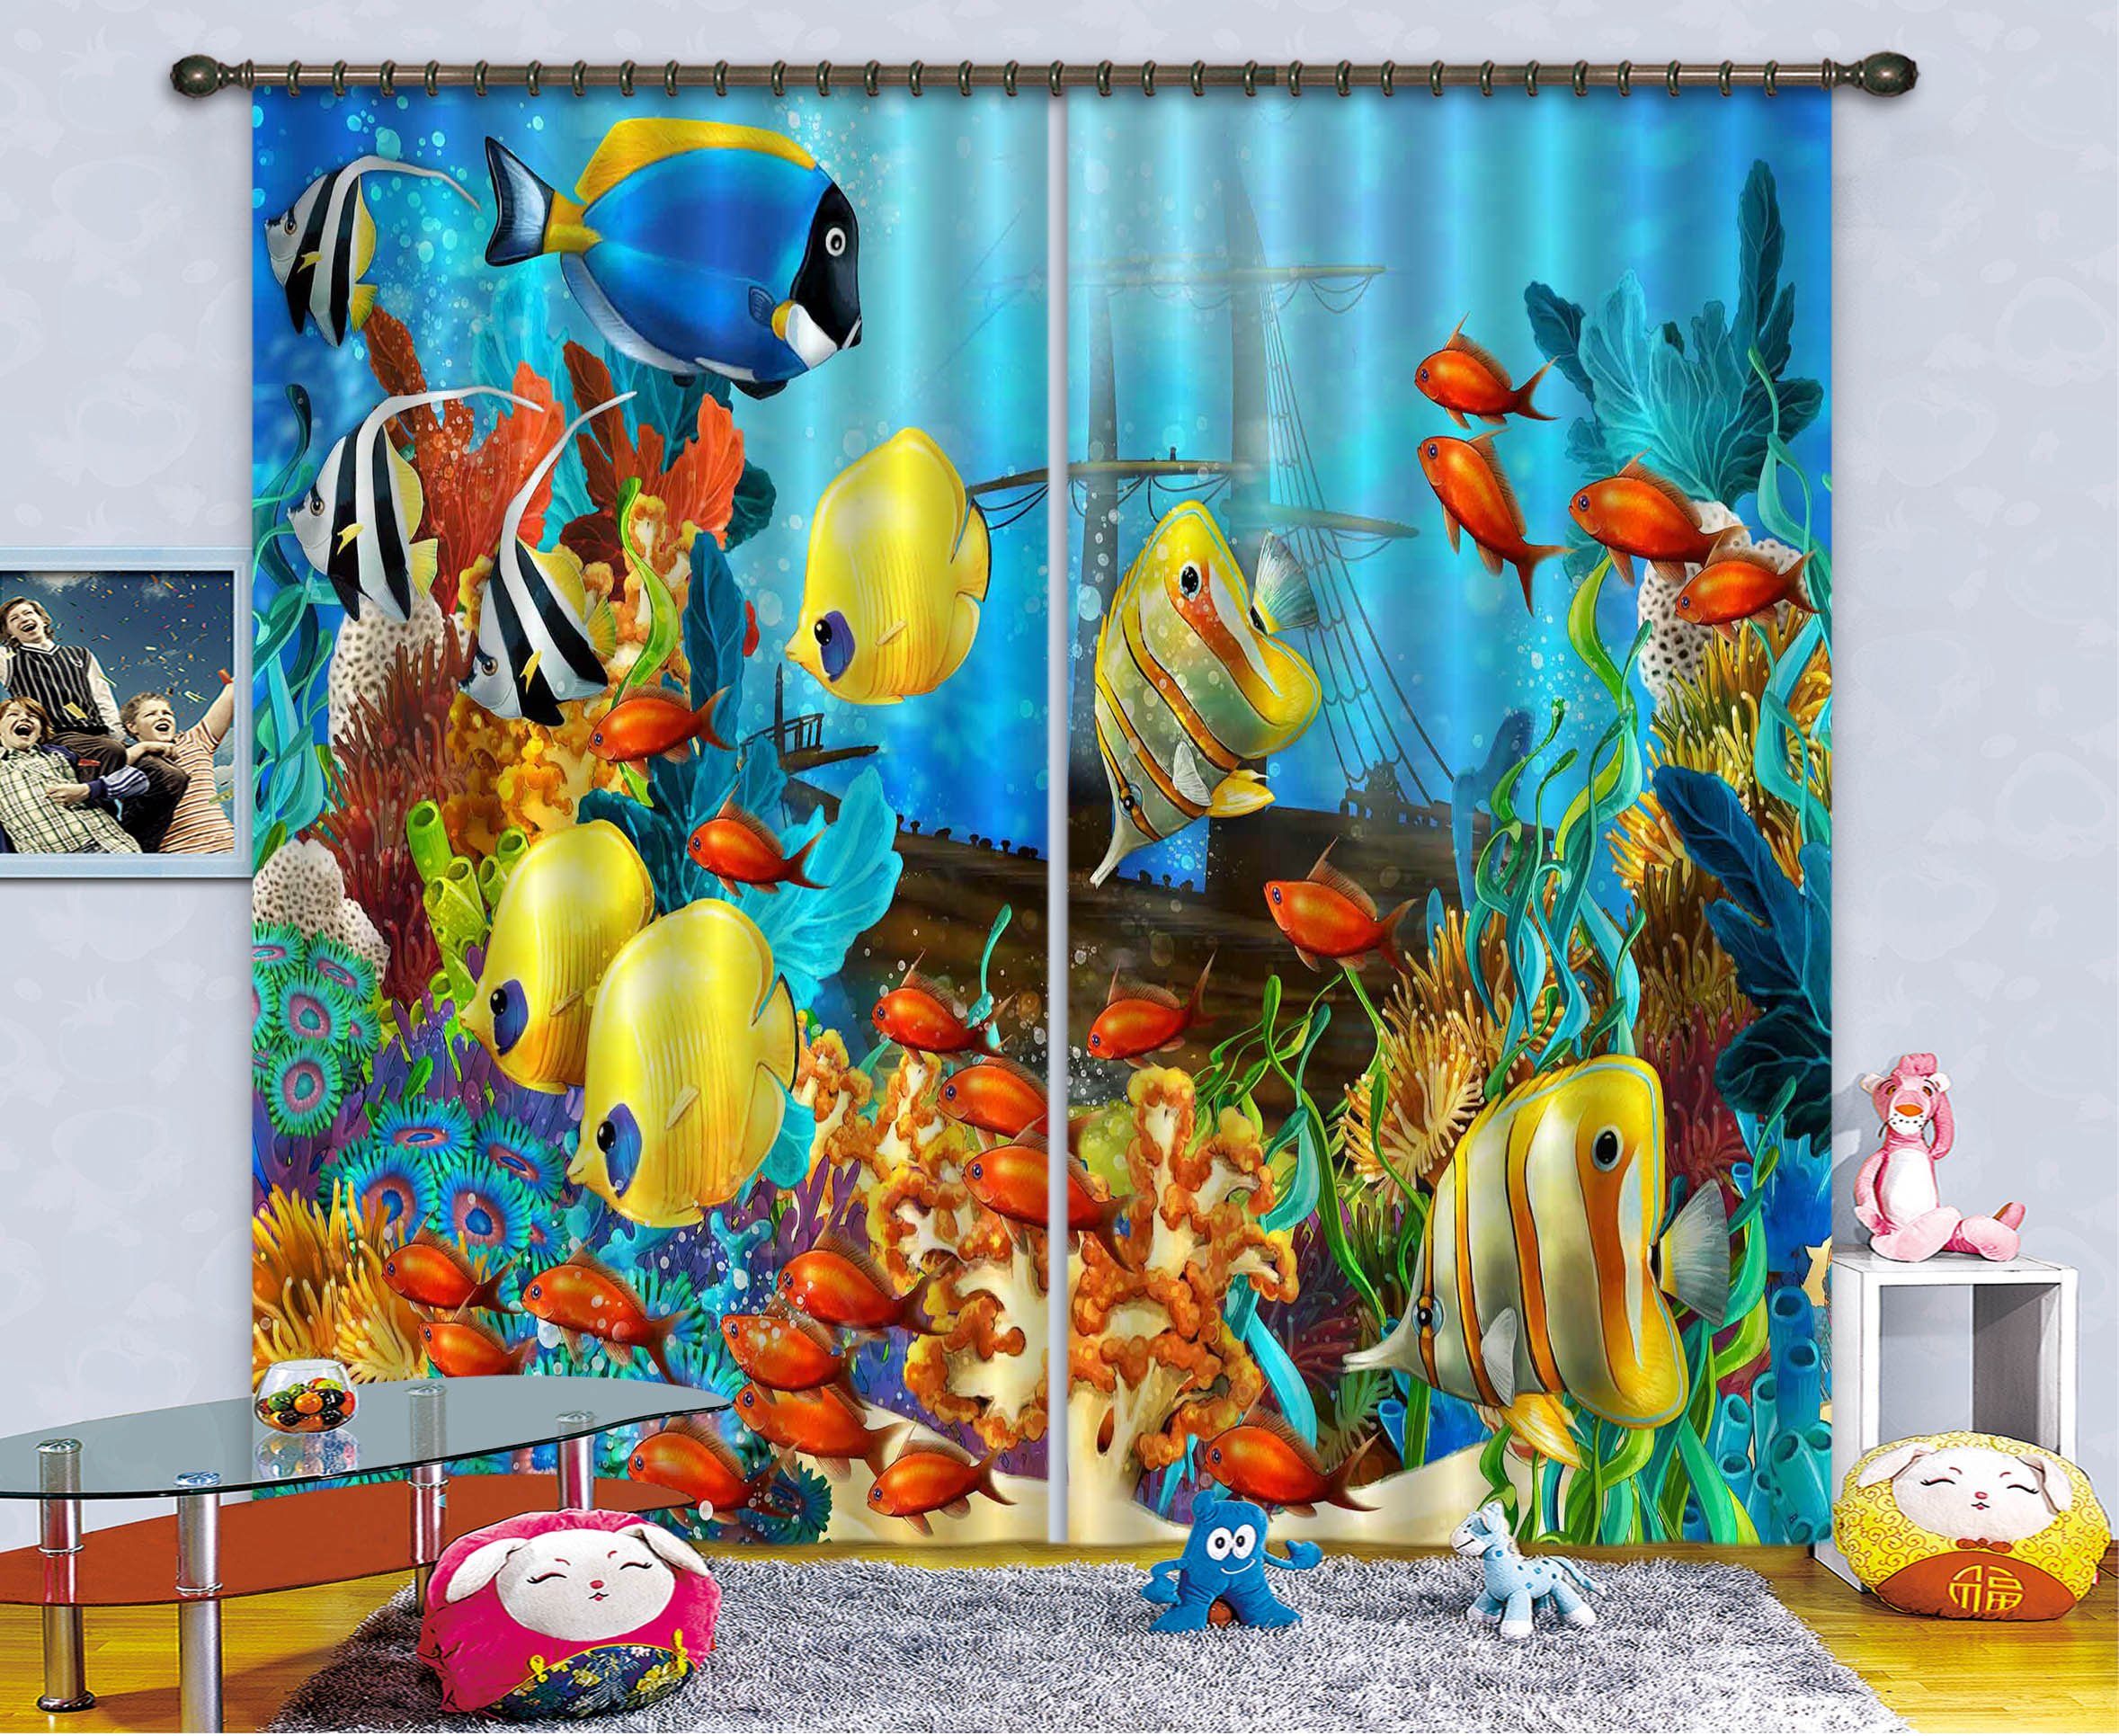 3D Seabed Boat 2255 Curtains Drapes Wallpaper AJ Wallpaper 